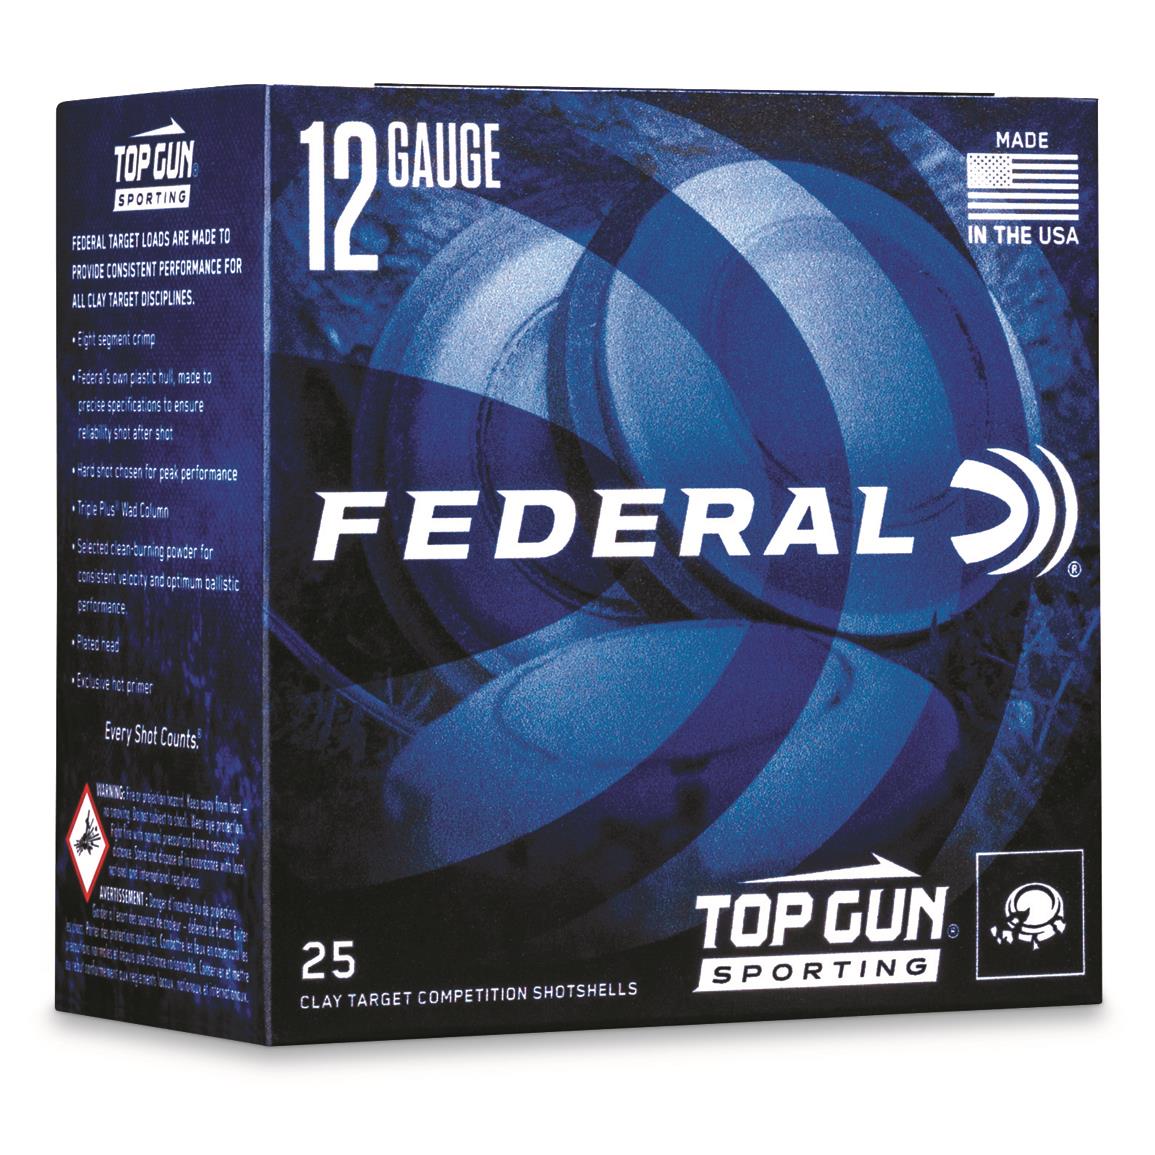 Federal Top Gun Sporting, 12 Gauge, 2 3/4", 1 oz., 250 Rounds